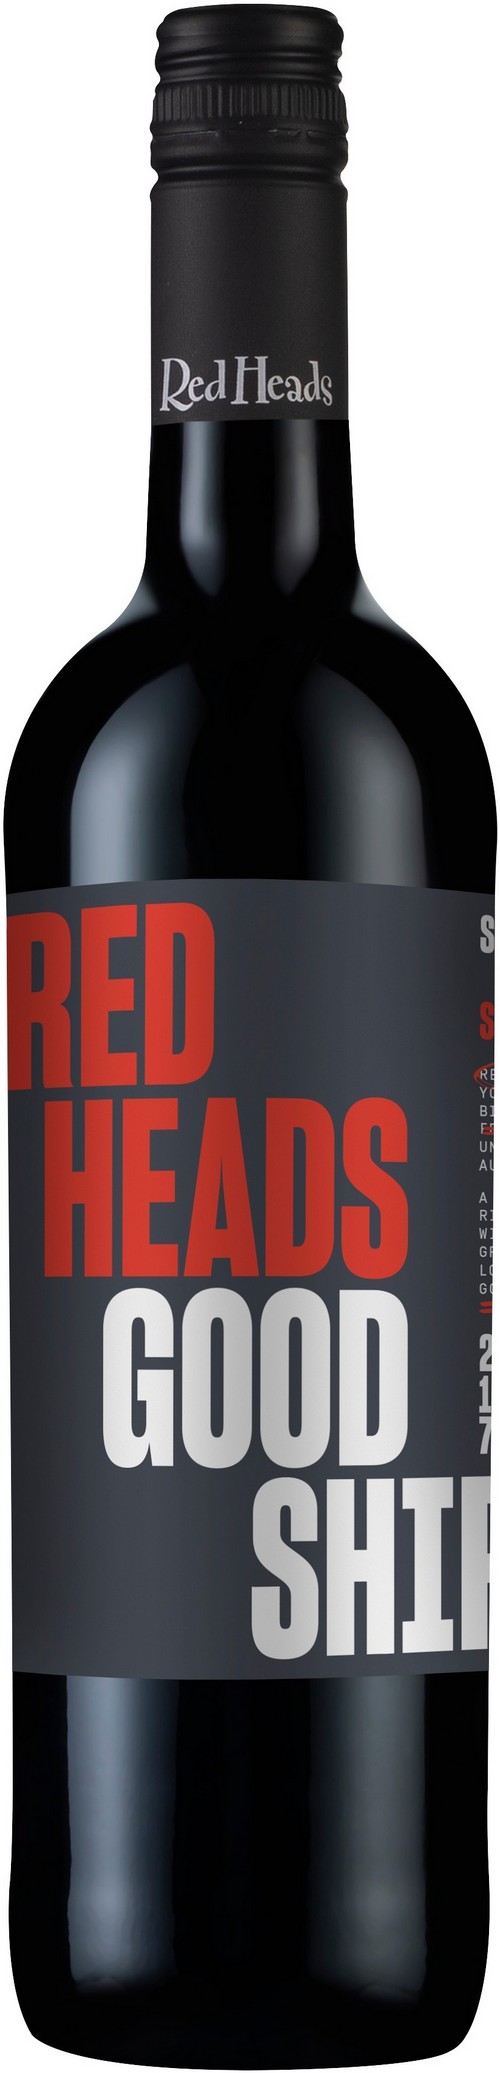 red-heads-good-shiraz-2021